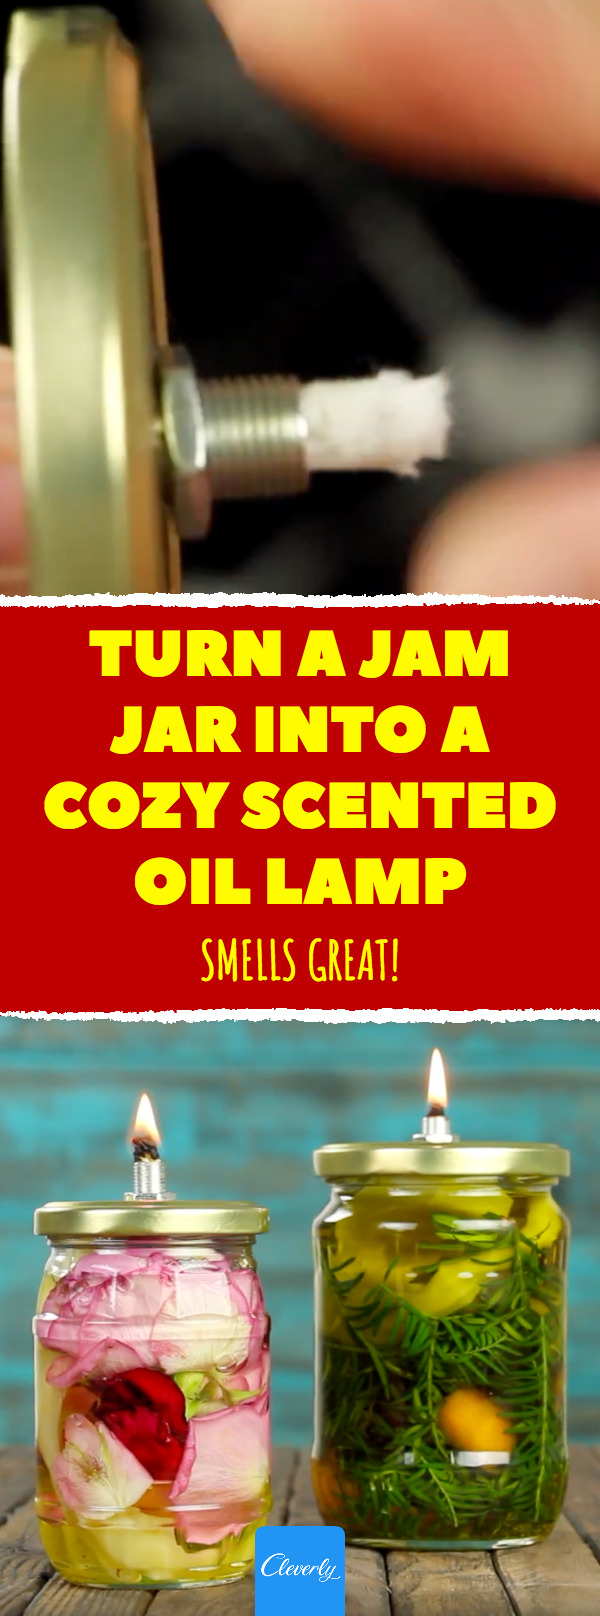 Turn A Jam Jar Into A Cozy Scented Oil Lamp - Turn A Jam Jar Into A Cozy Scented Oil Lamp -   18 diy Lamp jar ideas